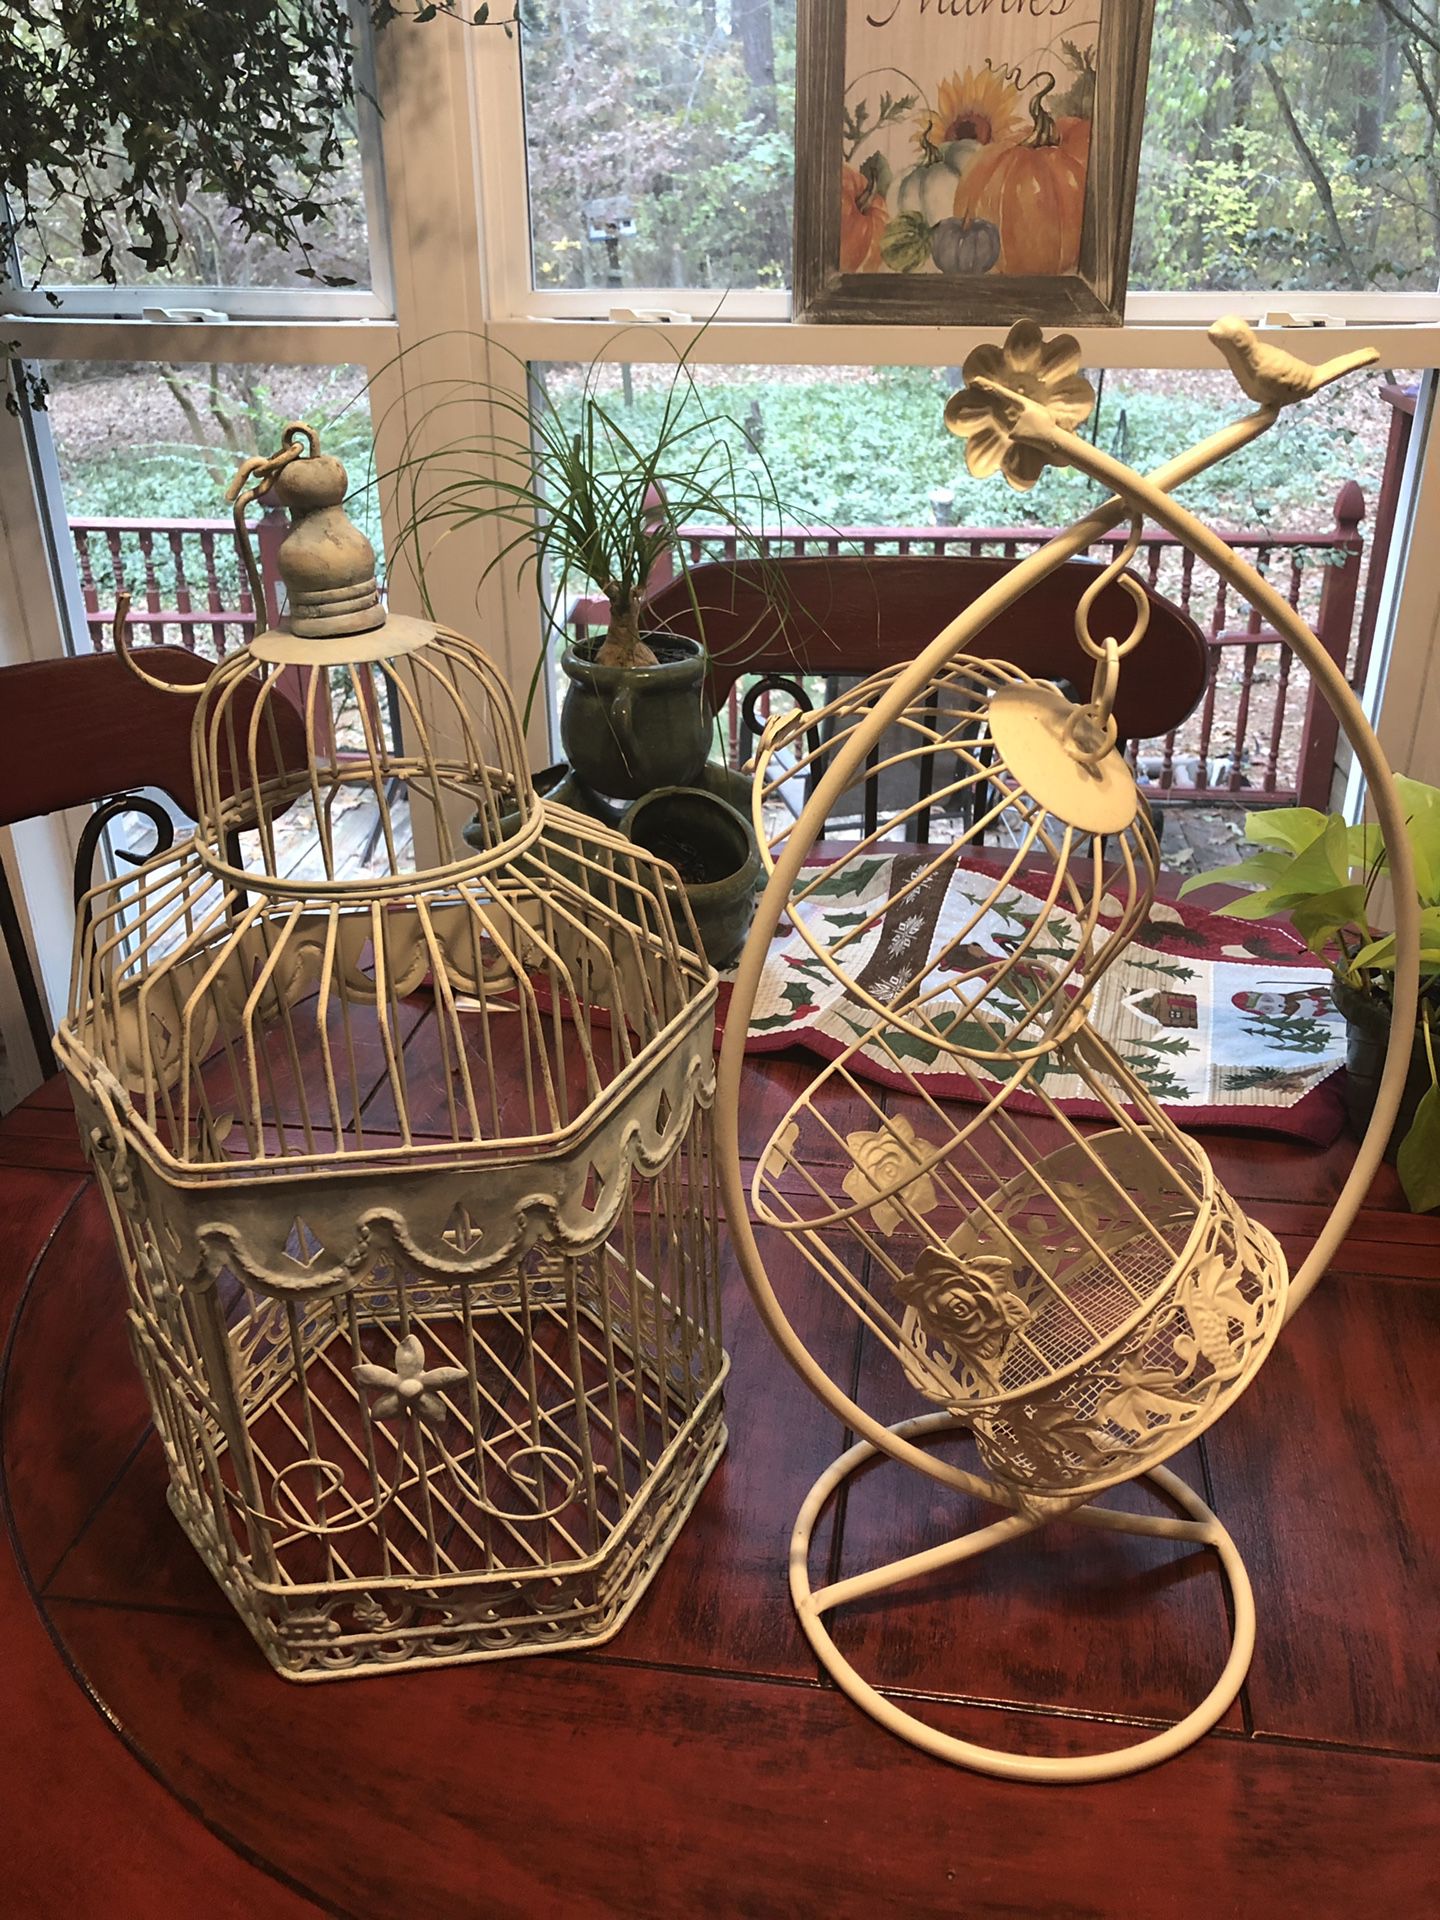 Decorative birdcages